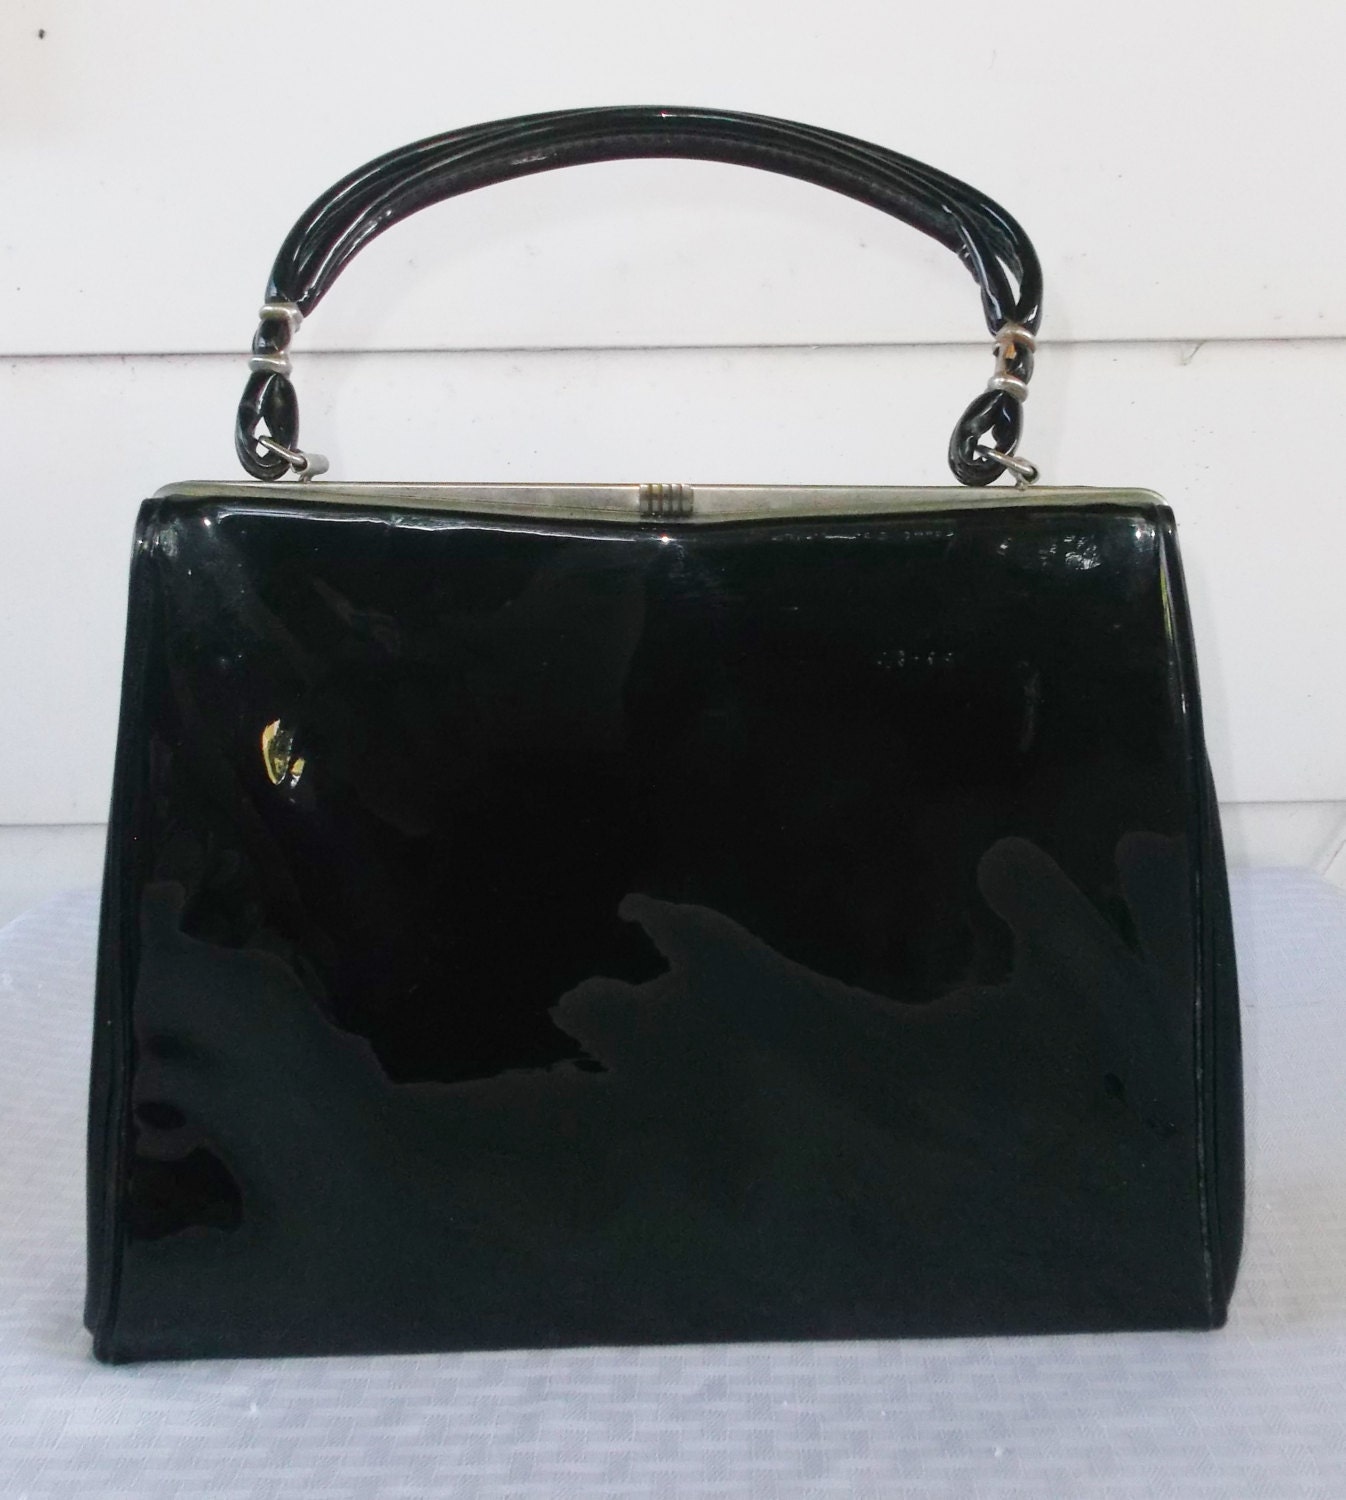 1960s Vintage Shiny Black Patent Leather Purse Handbag by